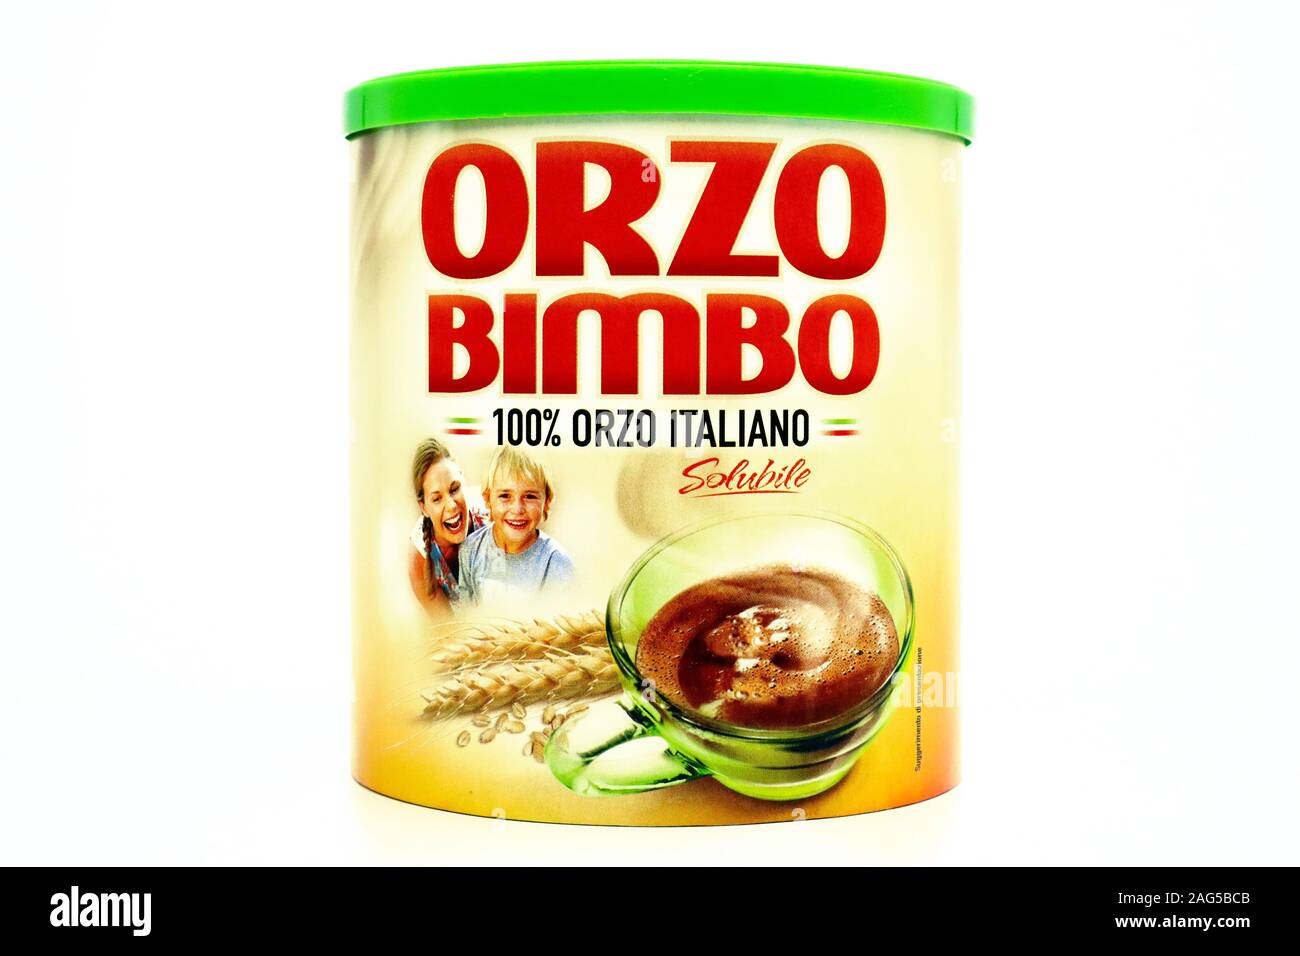 https://c8.alamy.com/comp/2AG5BCB/orzo-bimbo-100-italian-instant-soluble-barley-2AG5BCB.jpg